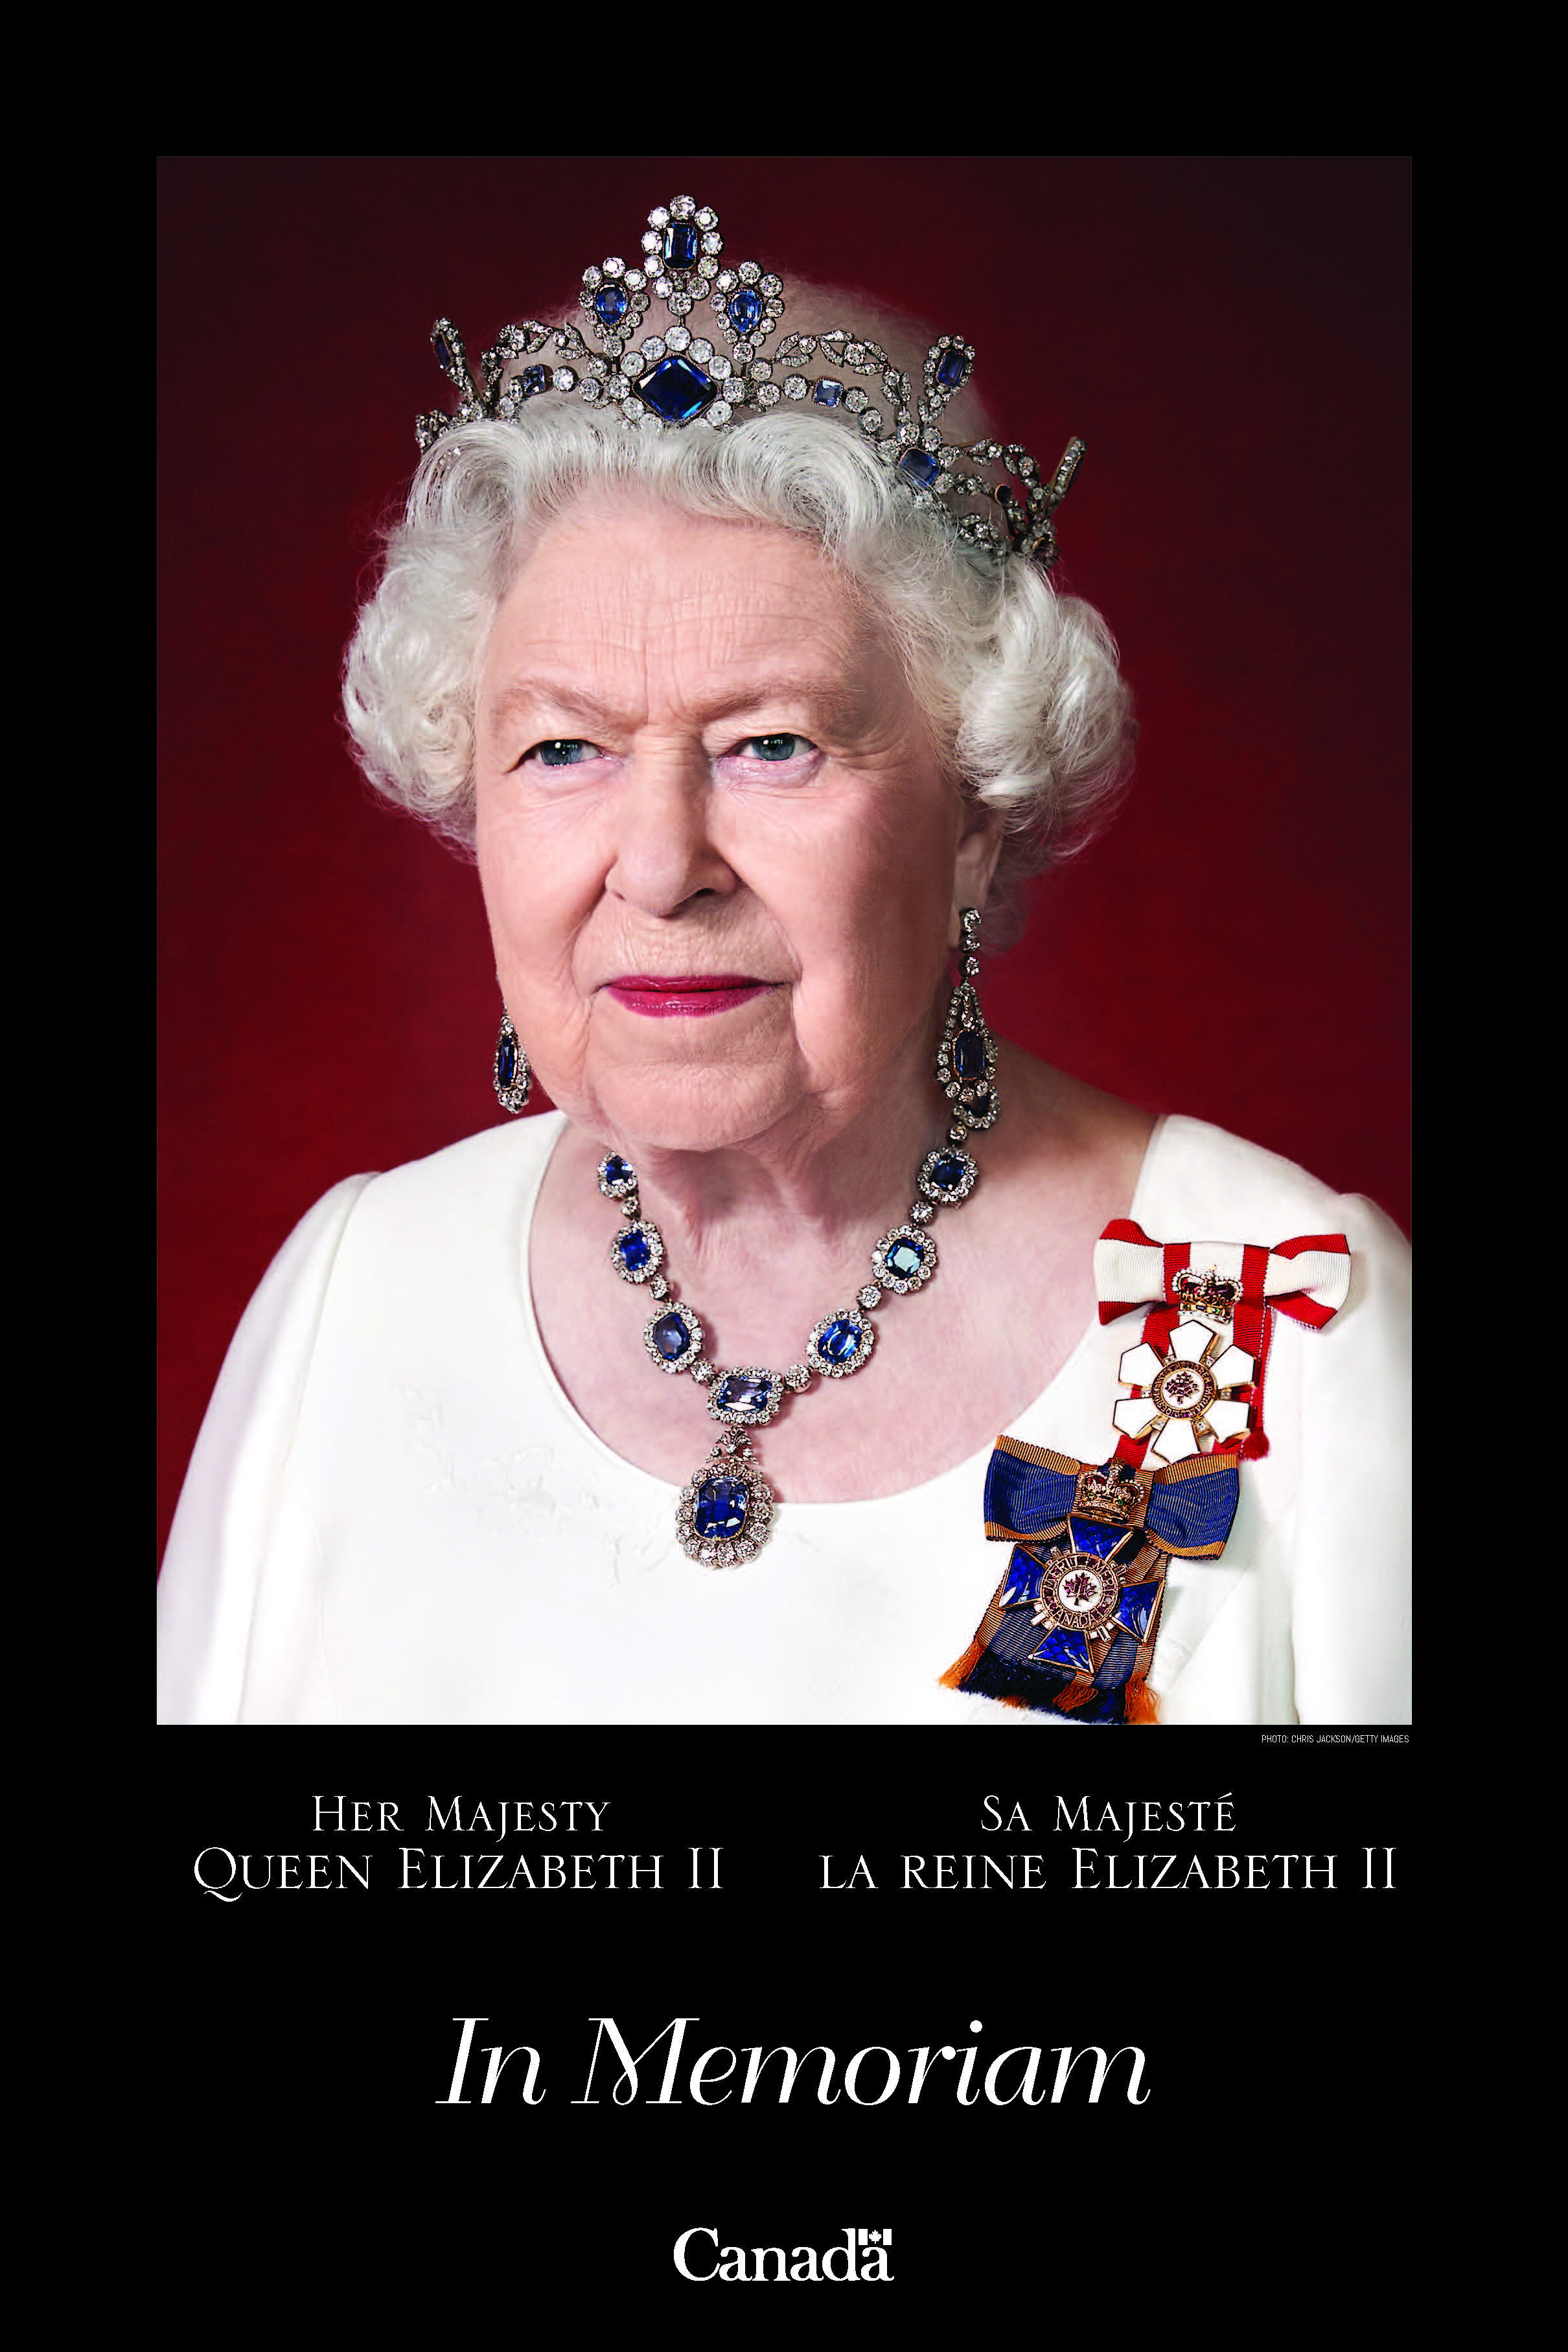 Her Majesty Queen Elizabeth II in a white dress and regalia against a dark red background.